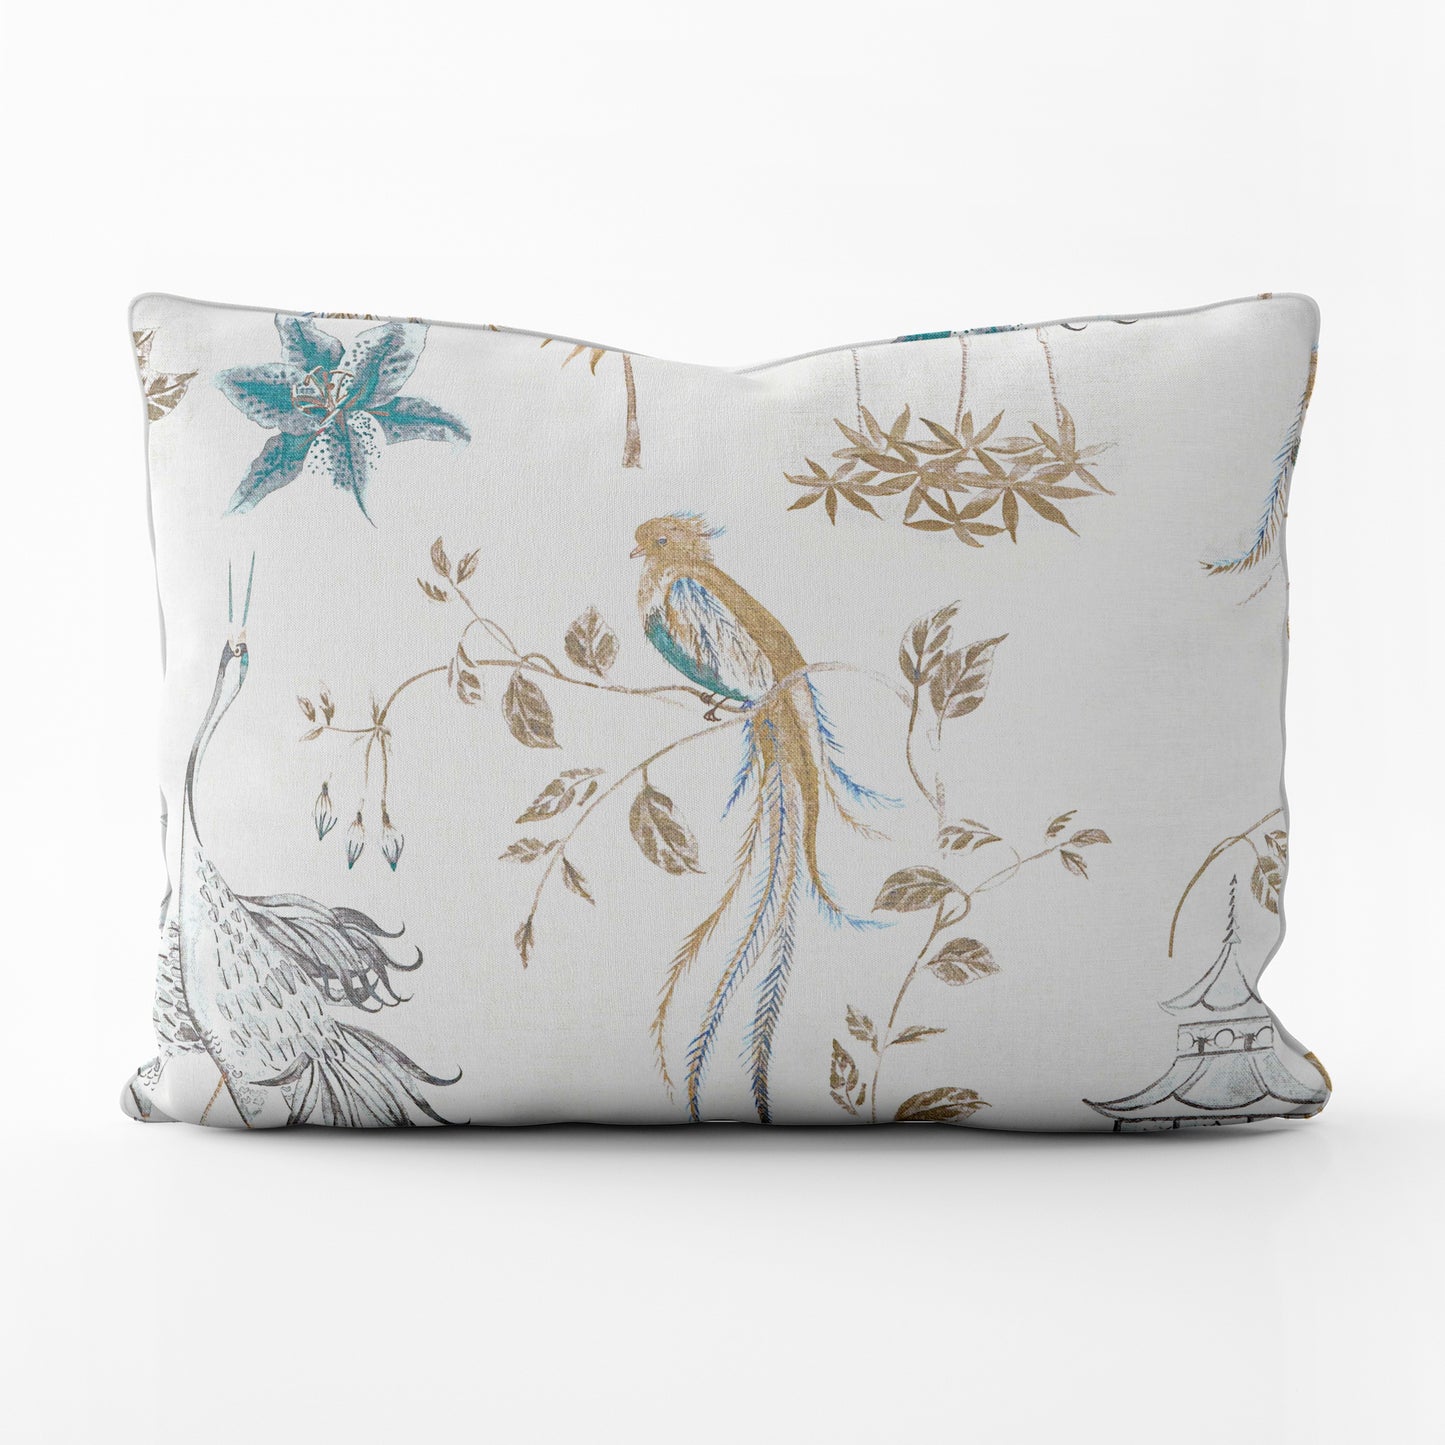 Decorative Pillows in Let It Crane Aegean Blue Oriental Toile, Multicolor Chinoiserie